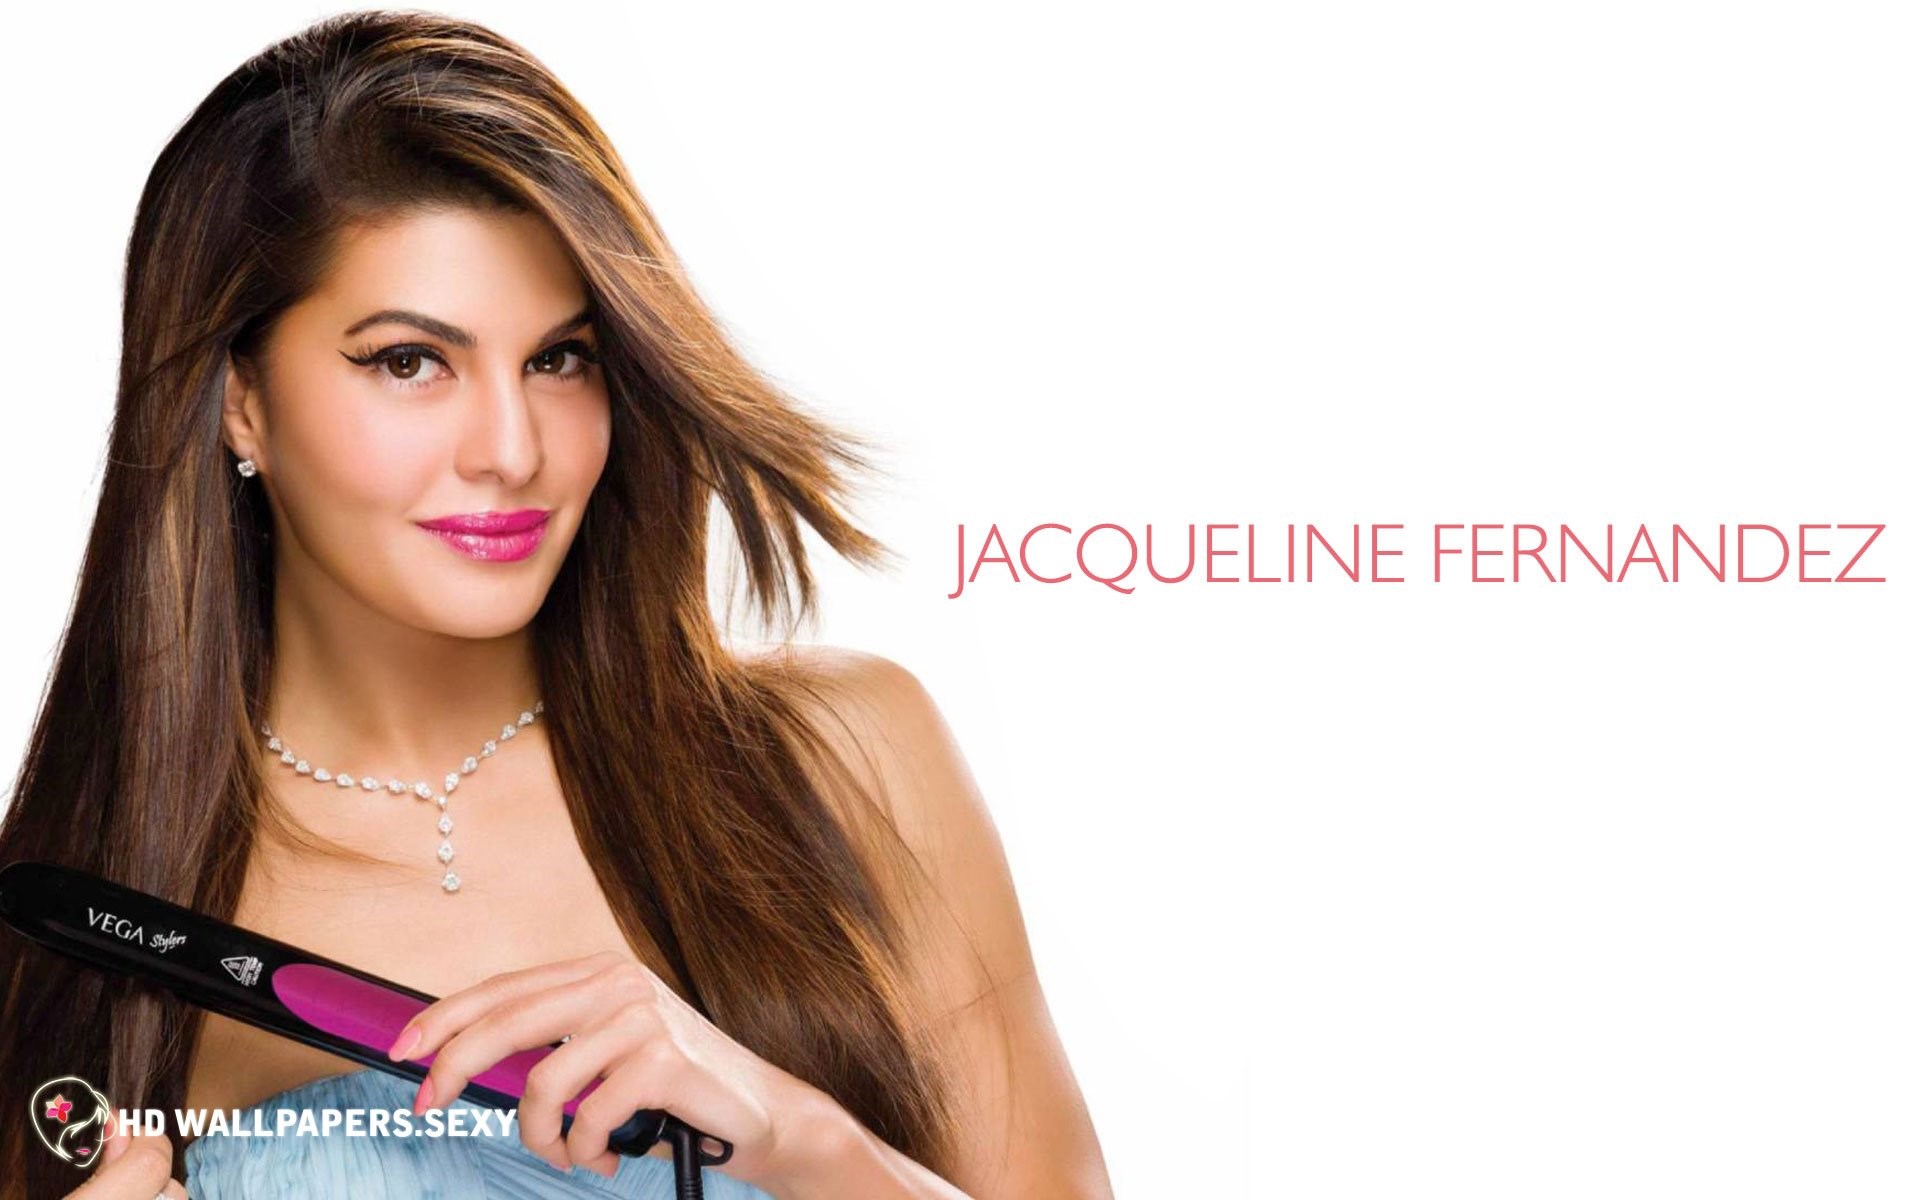 Jacqueline Fernandez Wallpaper - Beautiful Wallpaper Jacqueline Fernandez Hd - HD Wallpaper 